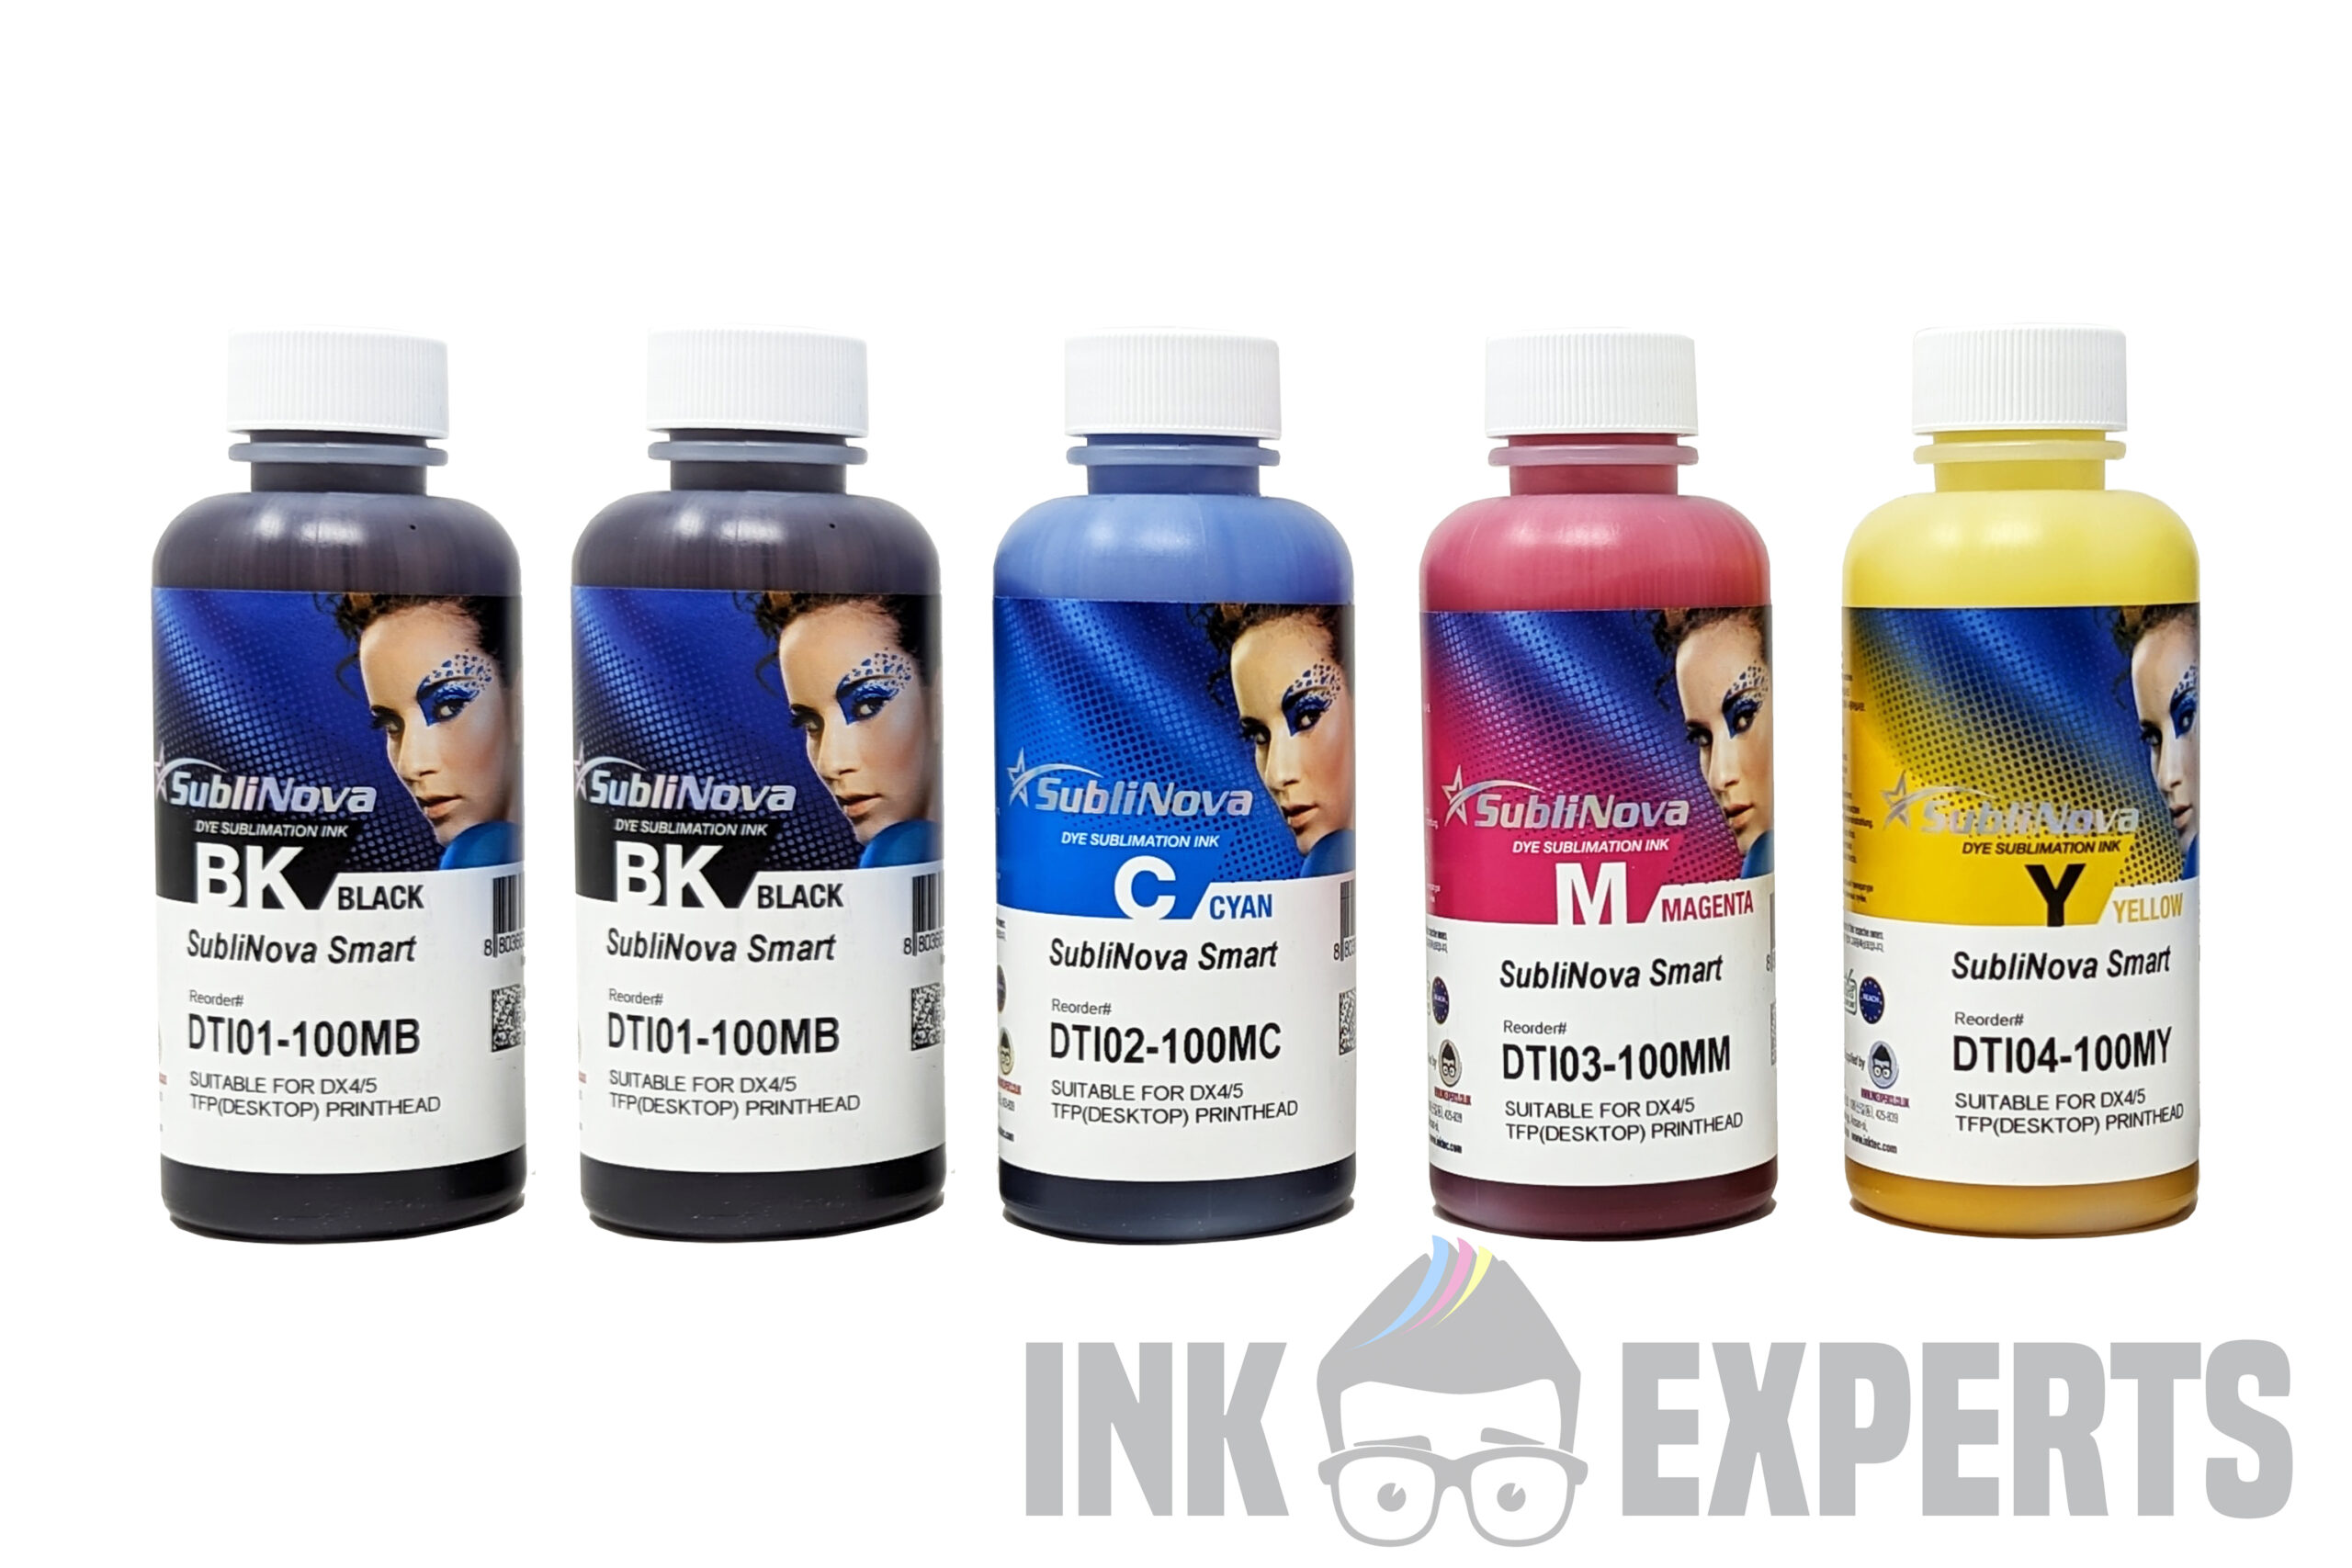 Epson EcoTank Printer Sublimation Ink Refills